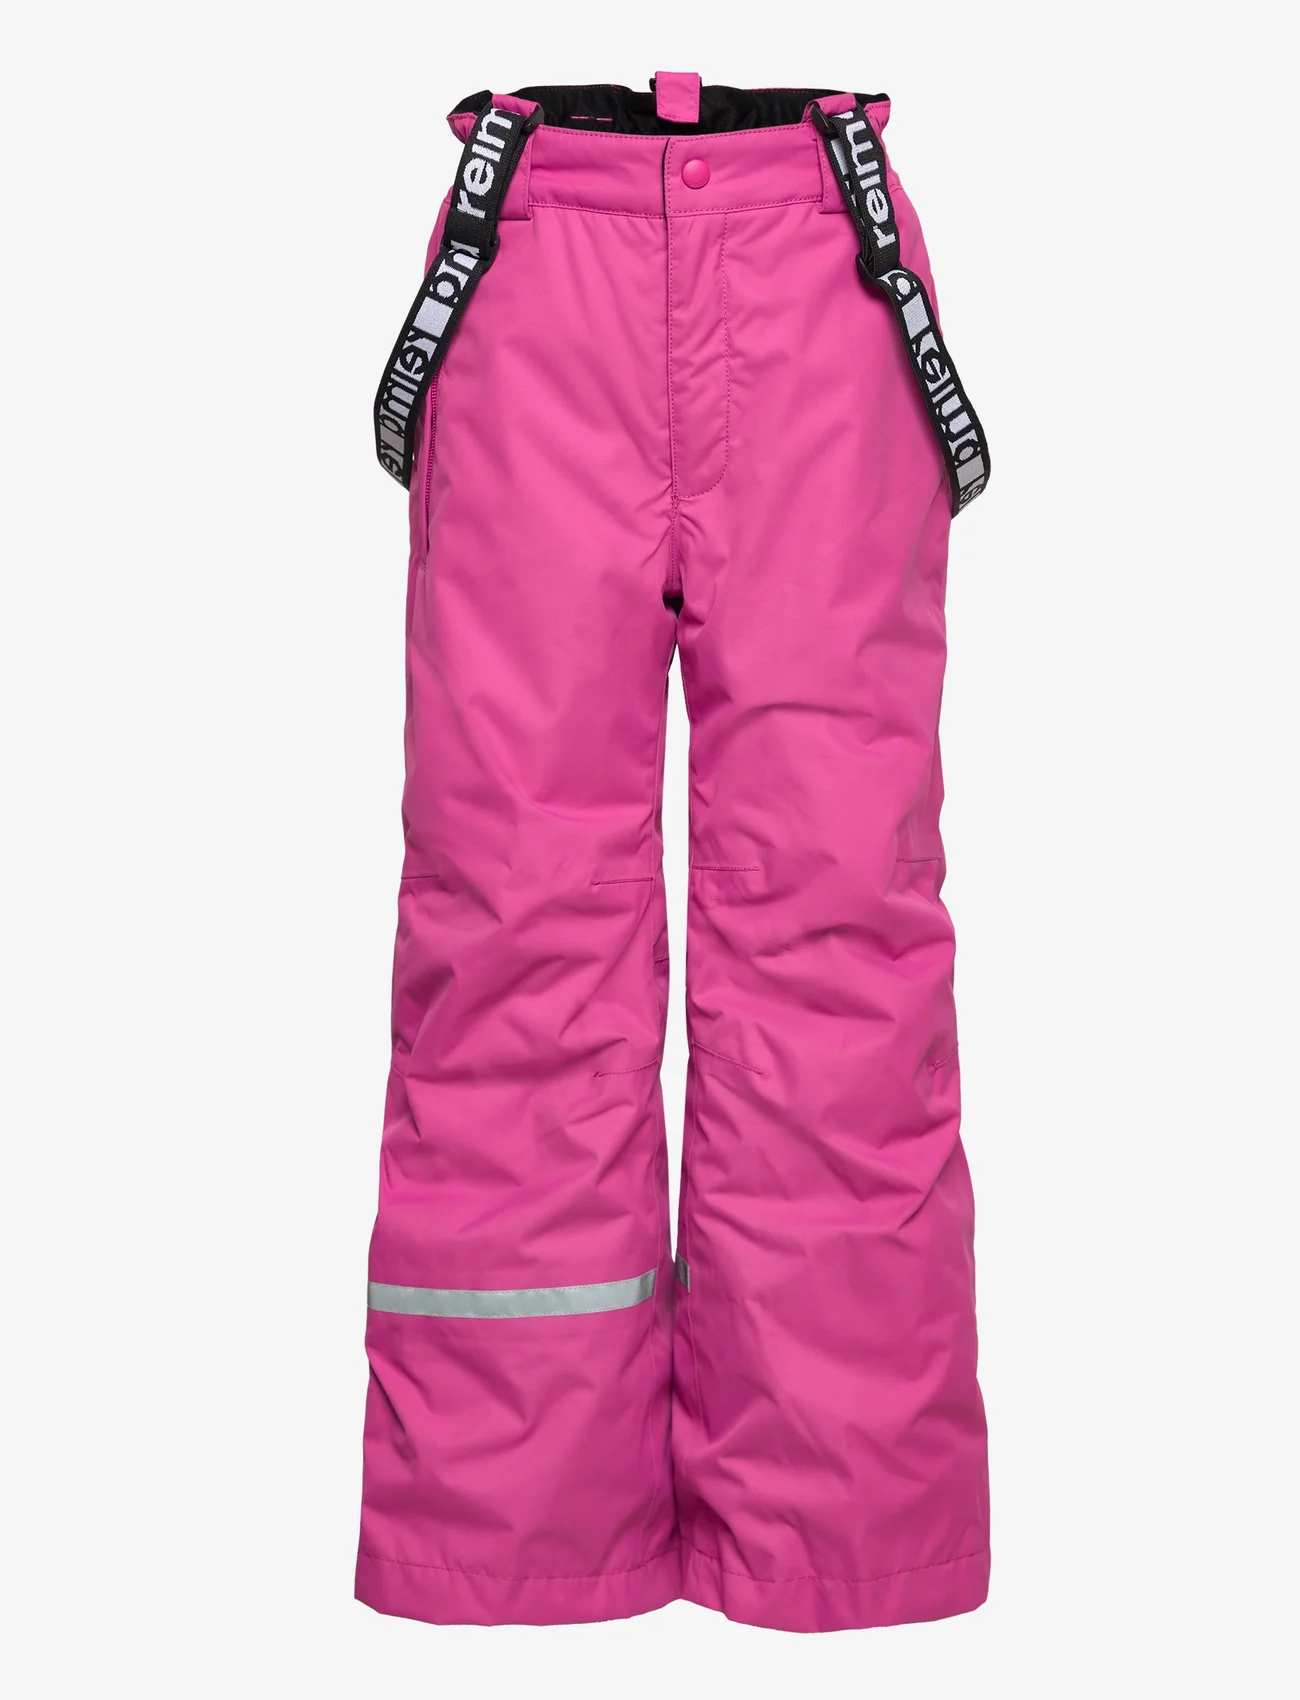 Reima - Winter pants, Tuokio - friluftsbukser - magenta purple - 0